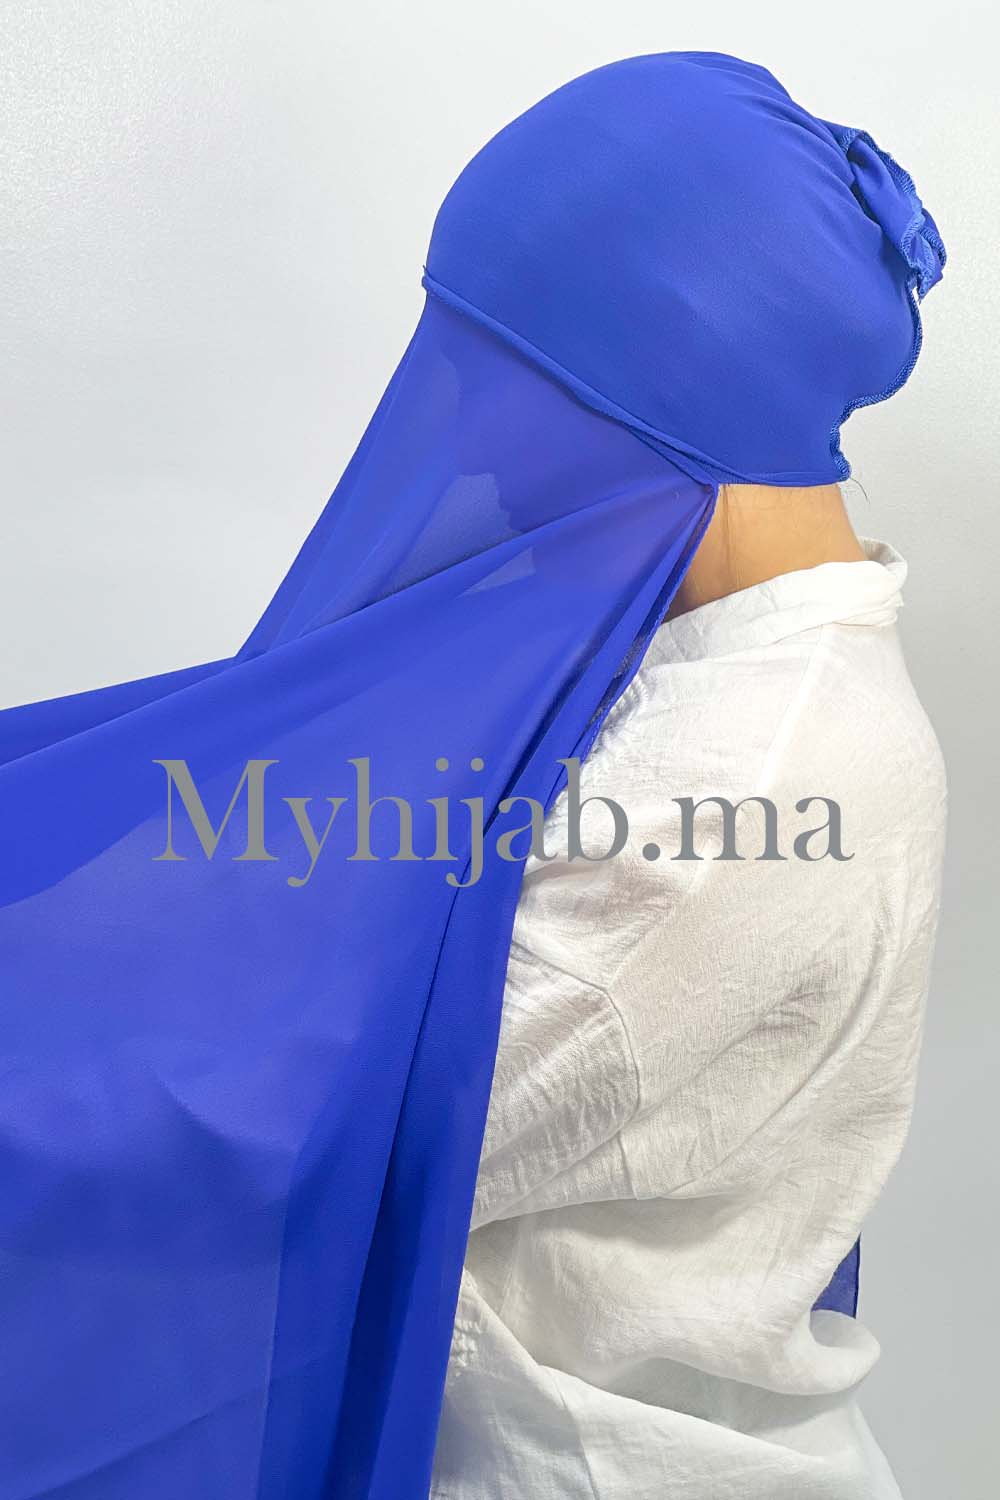 Chal Crêpe D-myhijab-حجابي-hijab-maroc-bonne-folar-esarf-challe